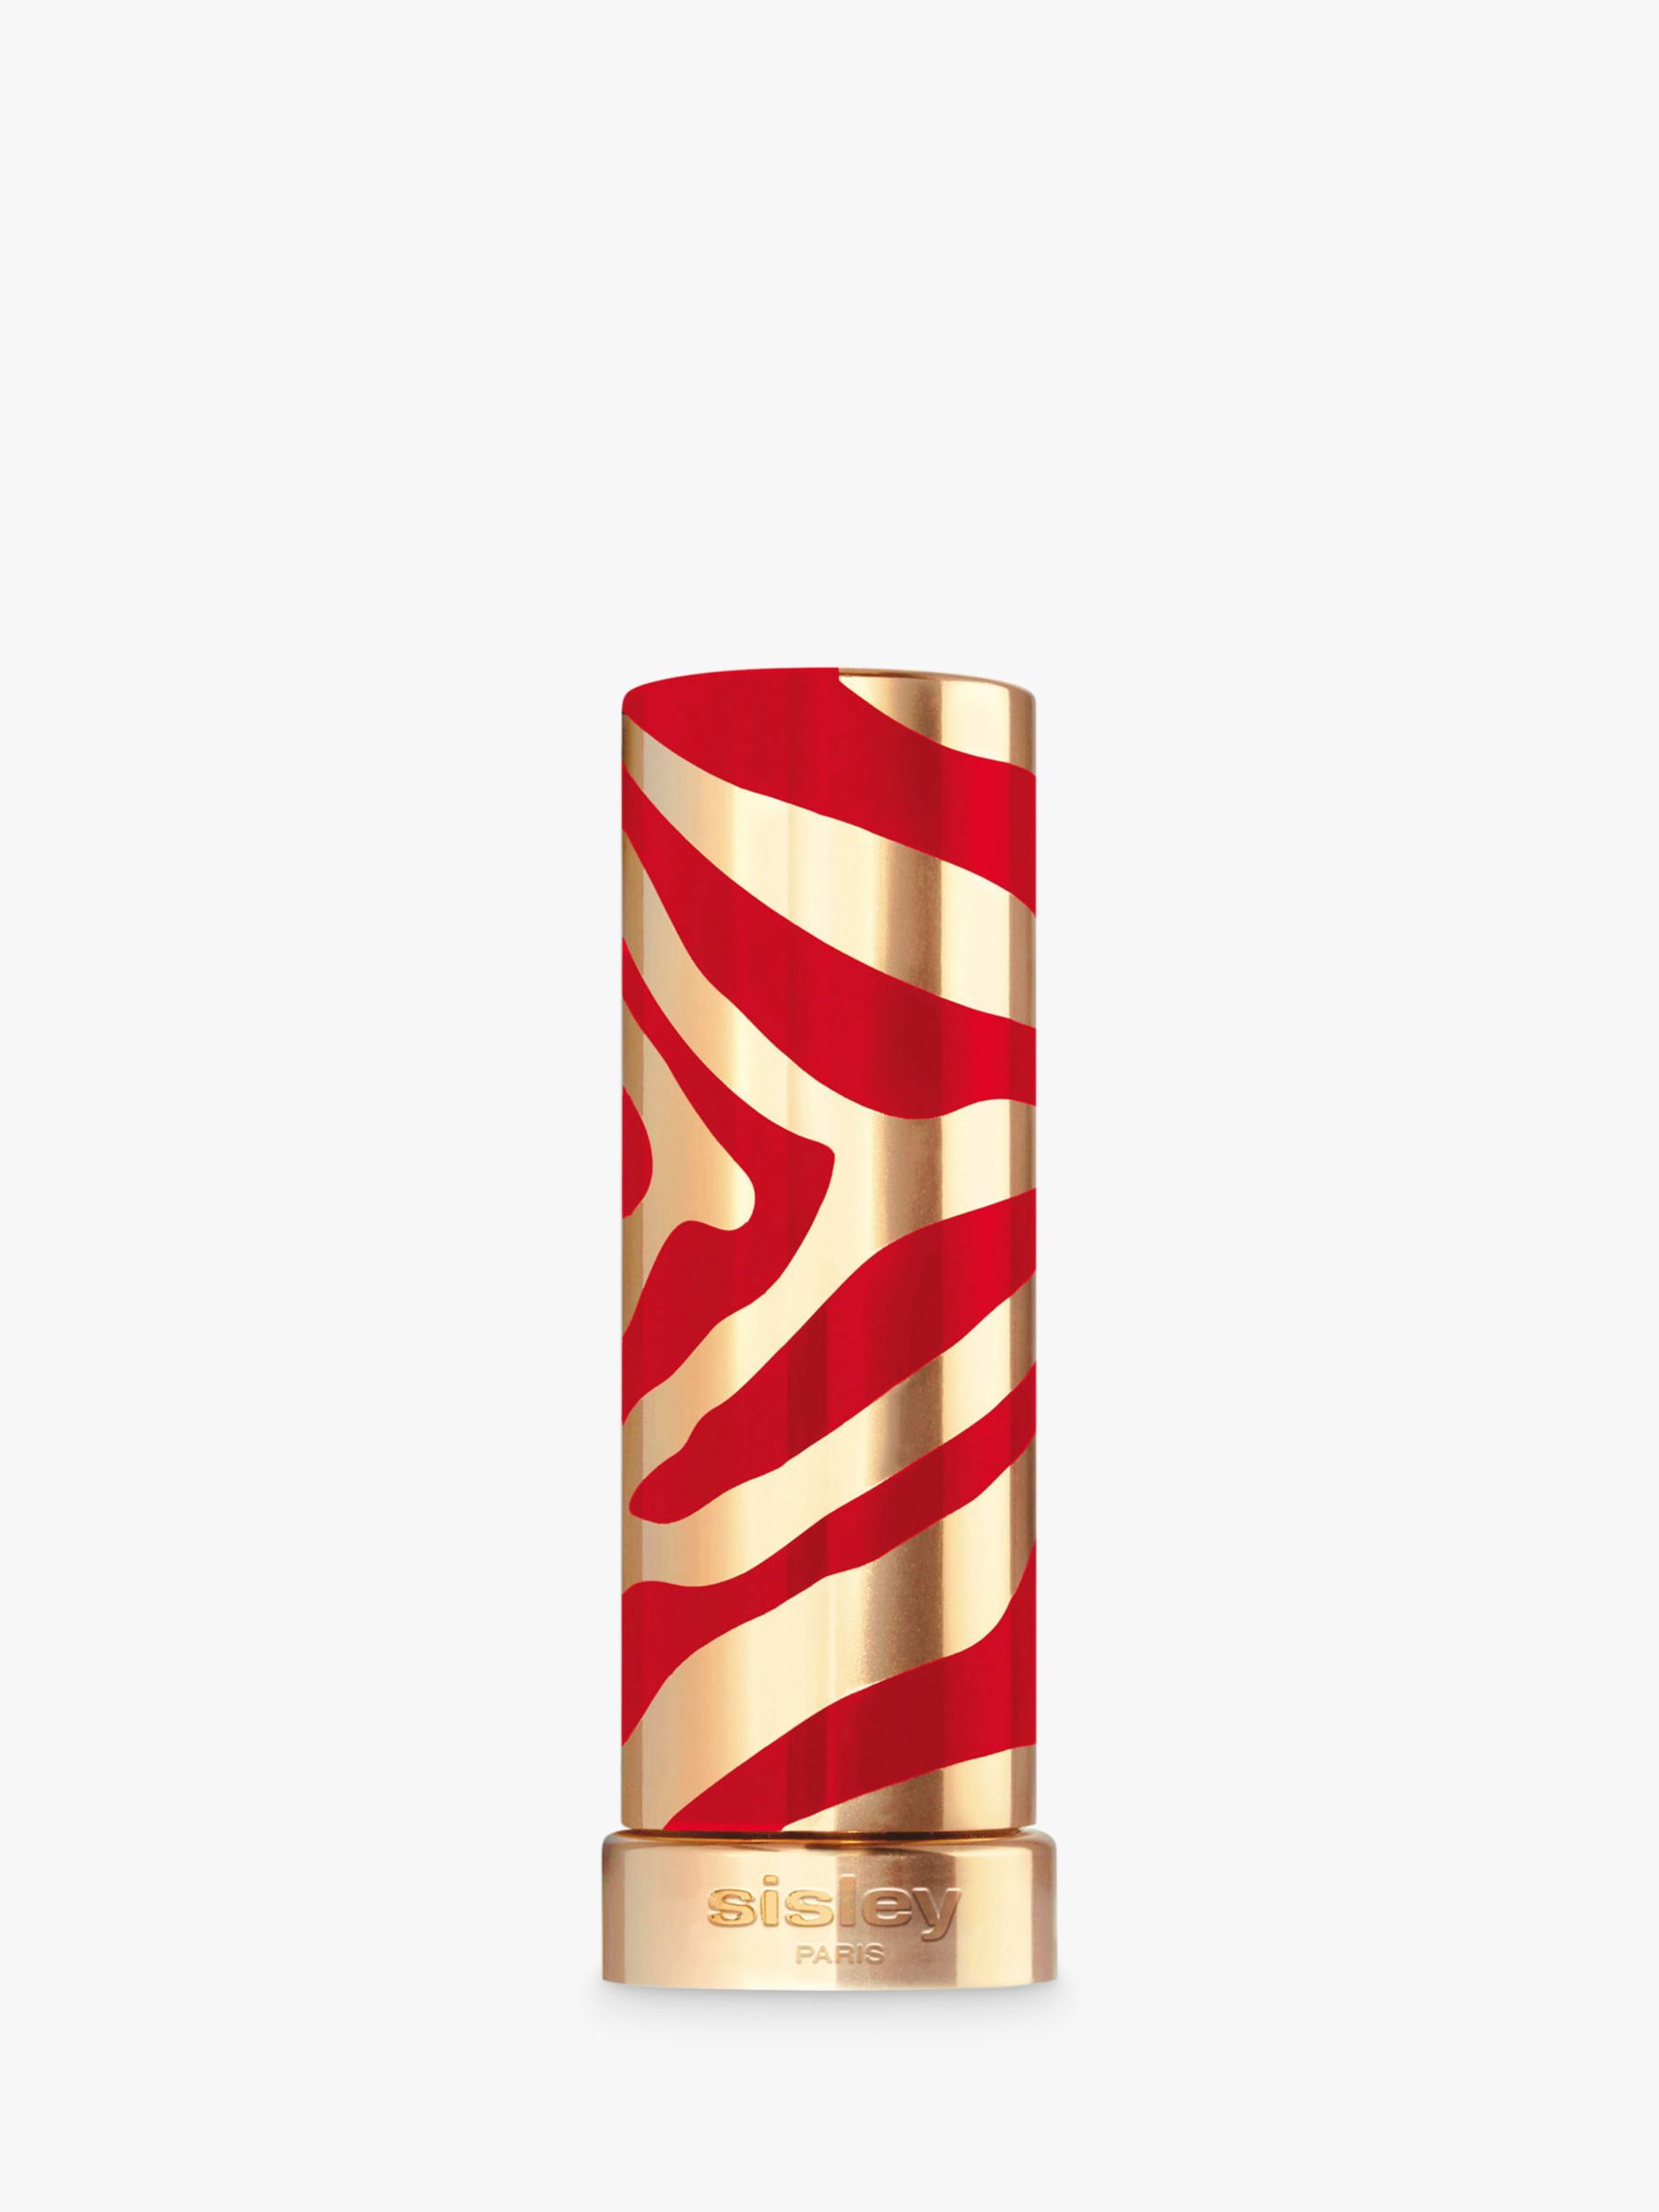 Sisley-Paris Le Phyto Rouge Lipstick Limited Edition, 16 Beige Bejing 2